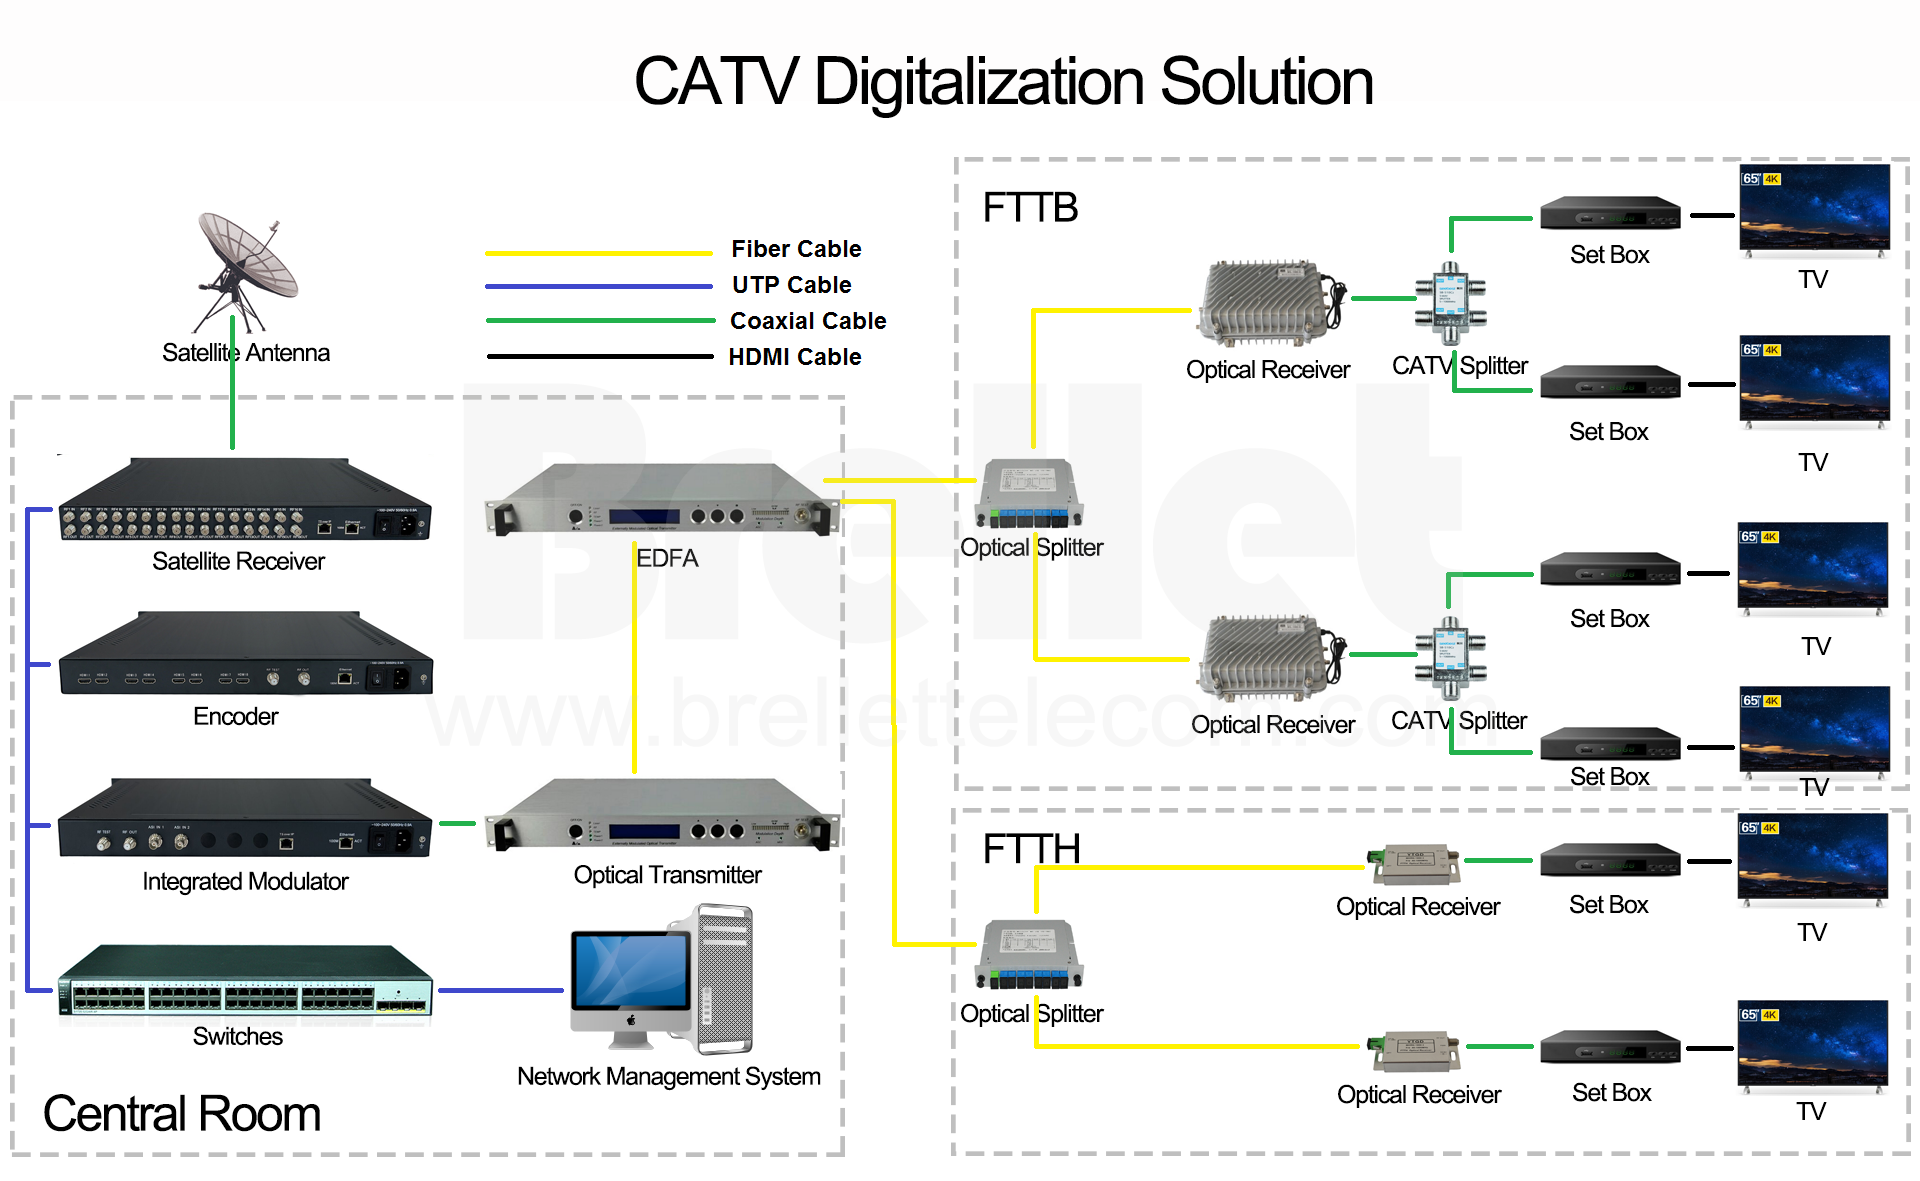 CATV Digitalization Solution